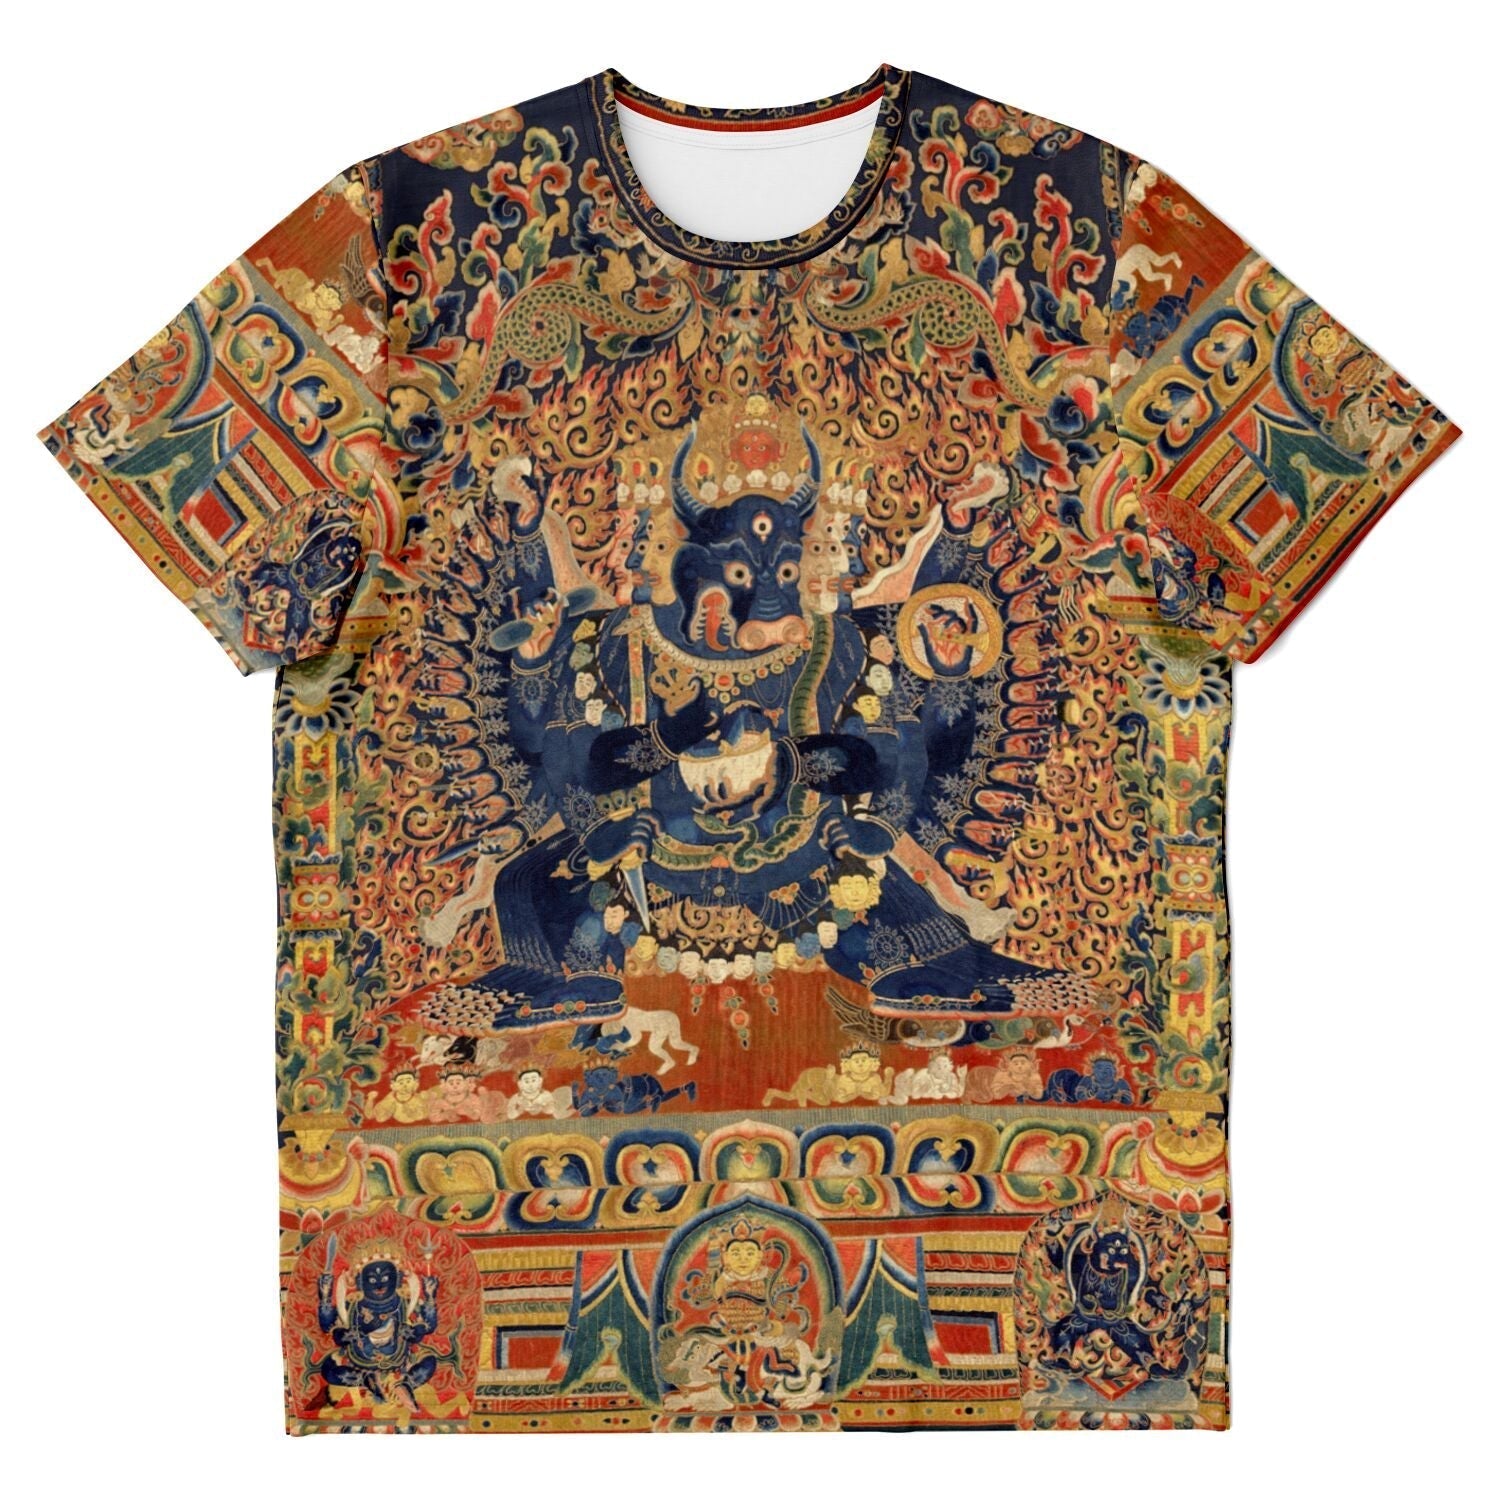 T-shirt XS Vajrabhairava Wrathful Deity | Tibetan Buddhist Protection, Meditation Deity | Zen Manjushri Emanation Graphic Art T-Shirt